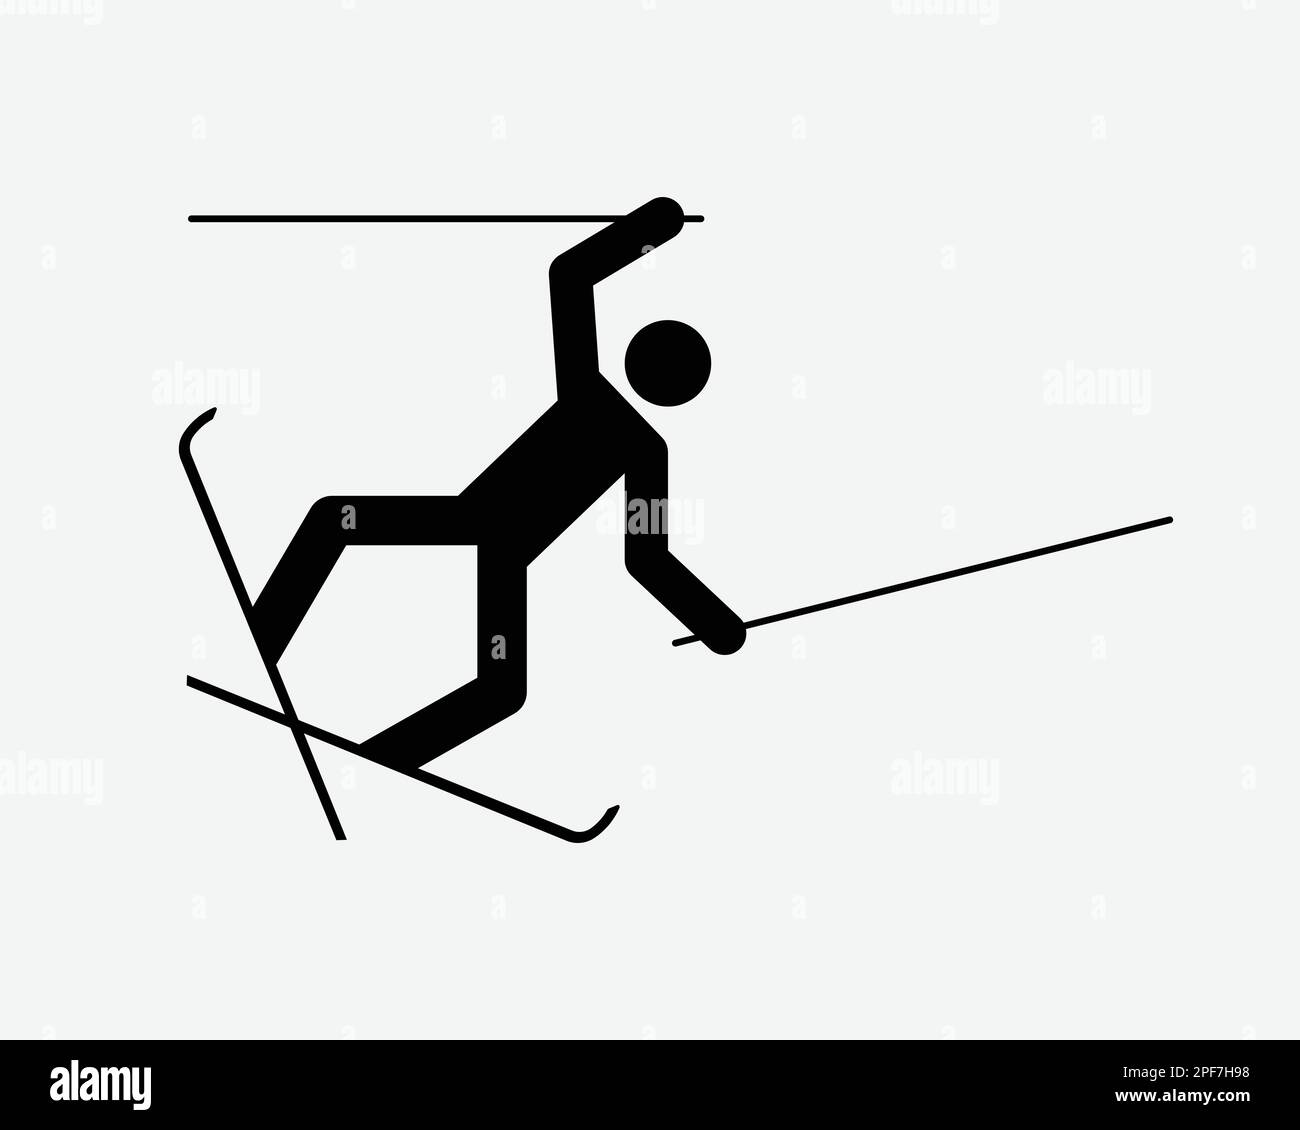 Skier Falling Ski Fall Down Accident Trip Lose Balance Black White Silhouette Symbol Icon Sign Graphic Clipart Artwork Illustration Pictogram Vector Stock Vector